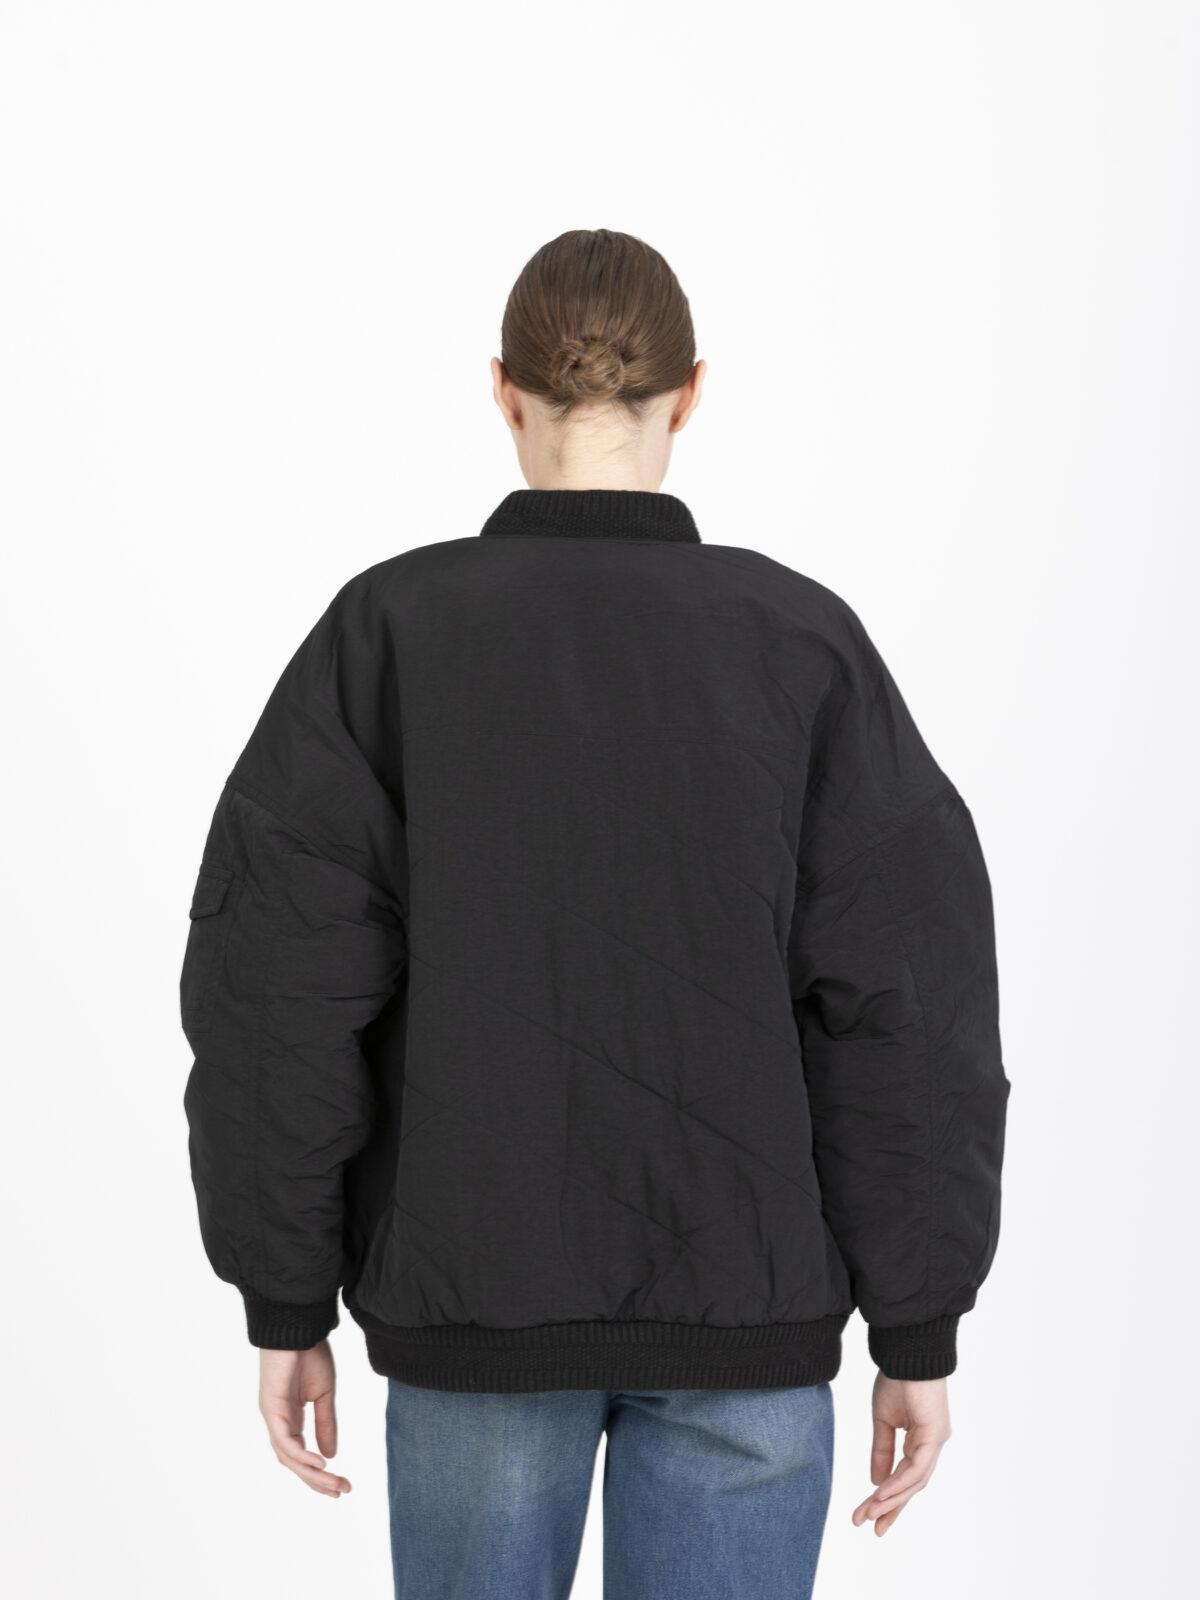 rodmay-bomber-jacket-black-faux-fur-oversized-sessun-matchboxtahens